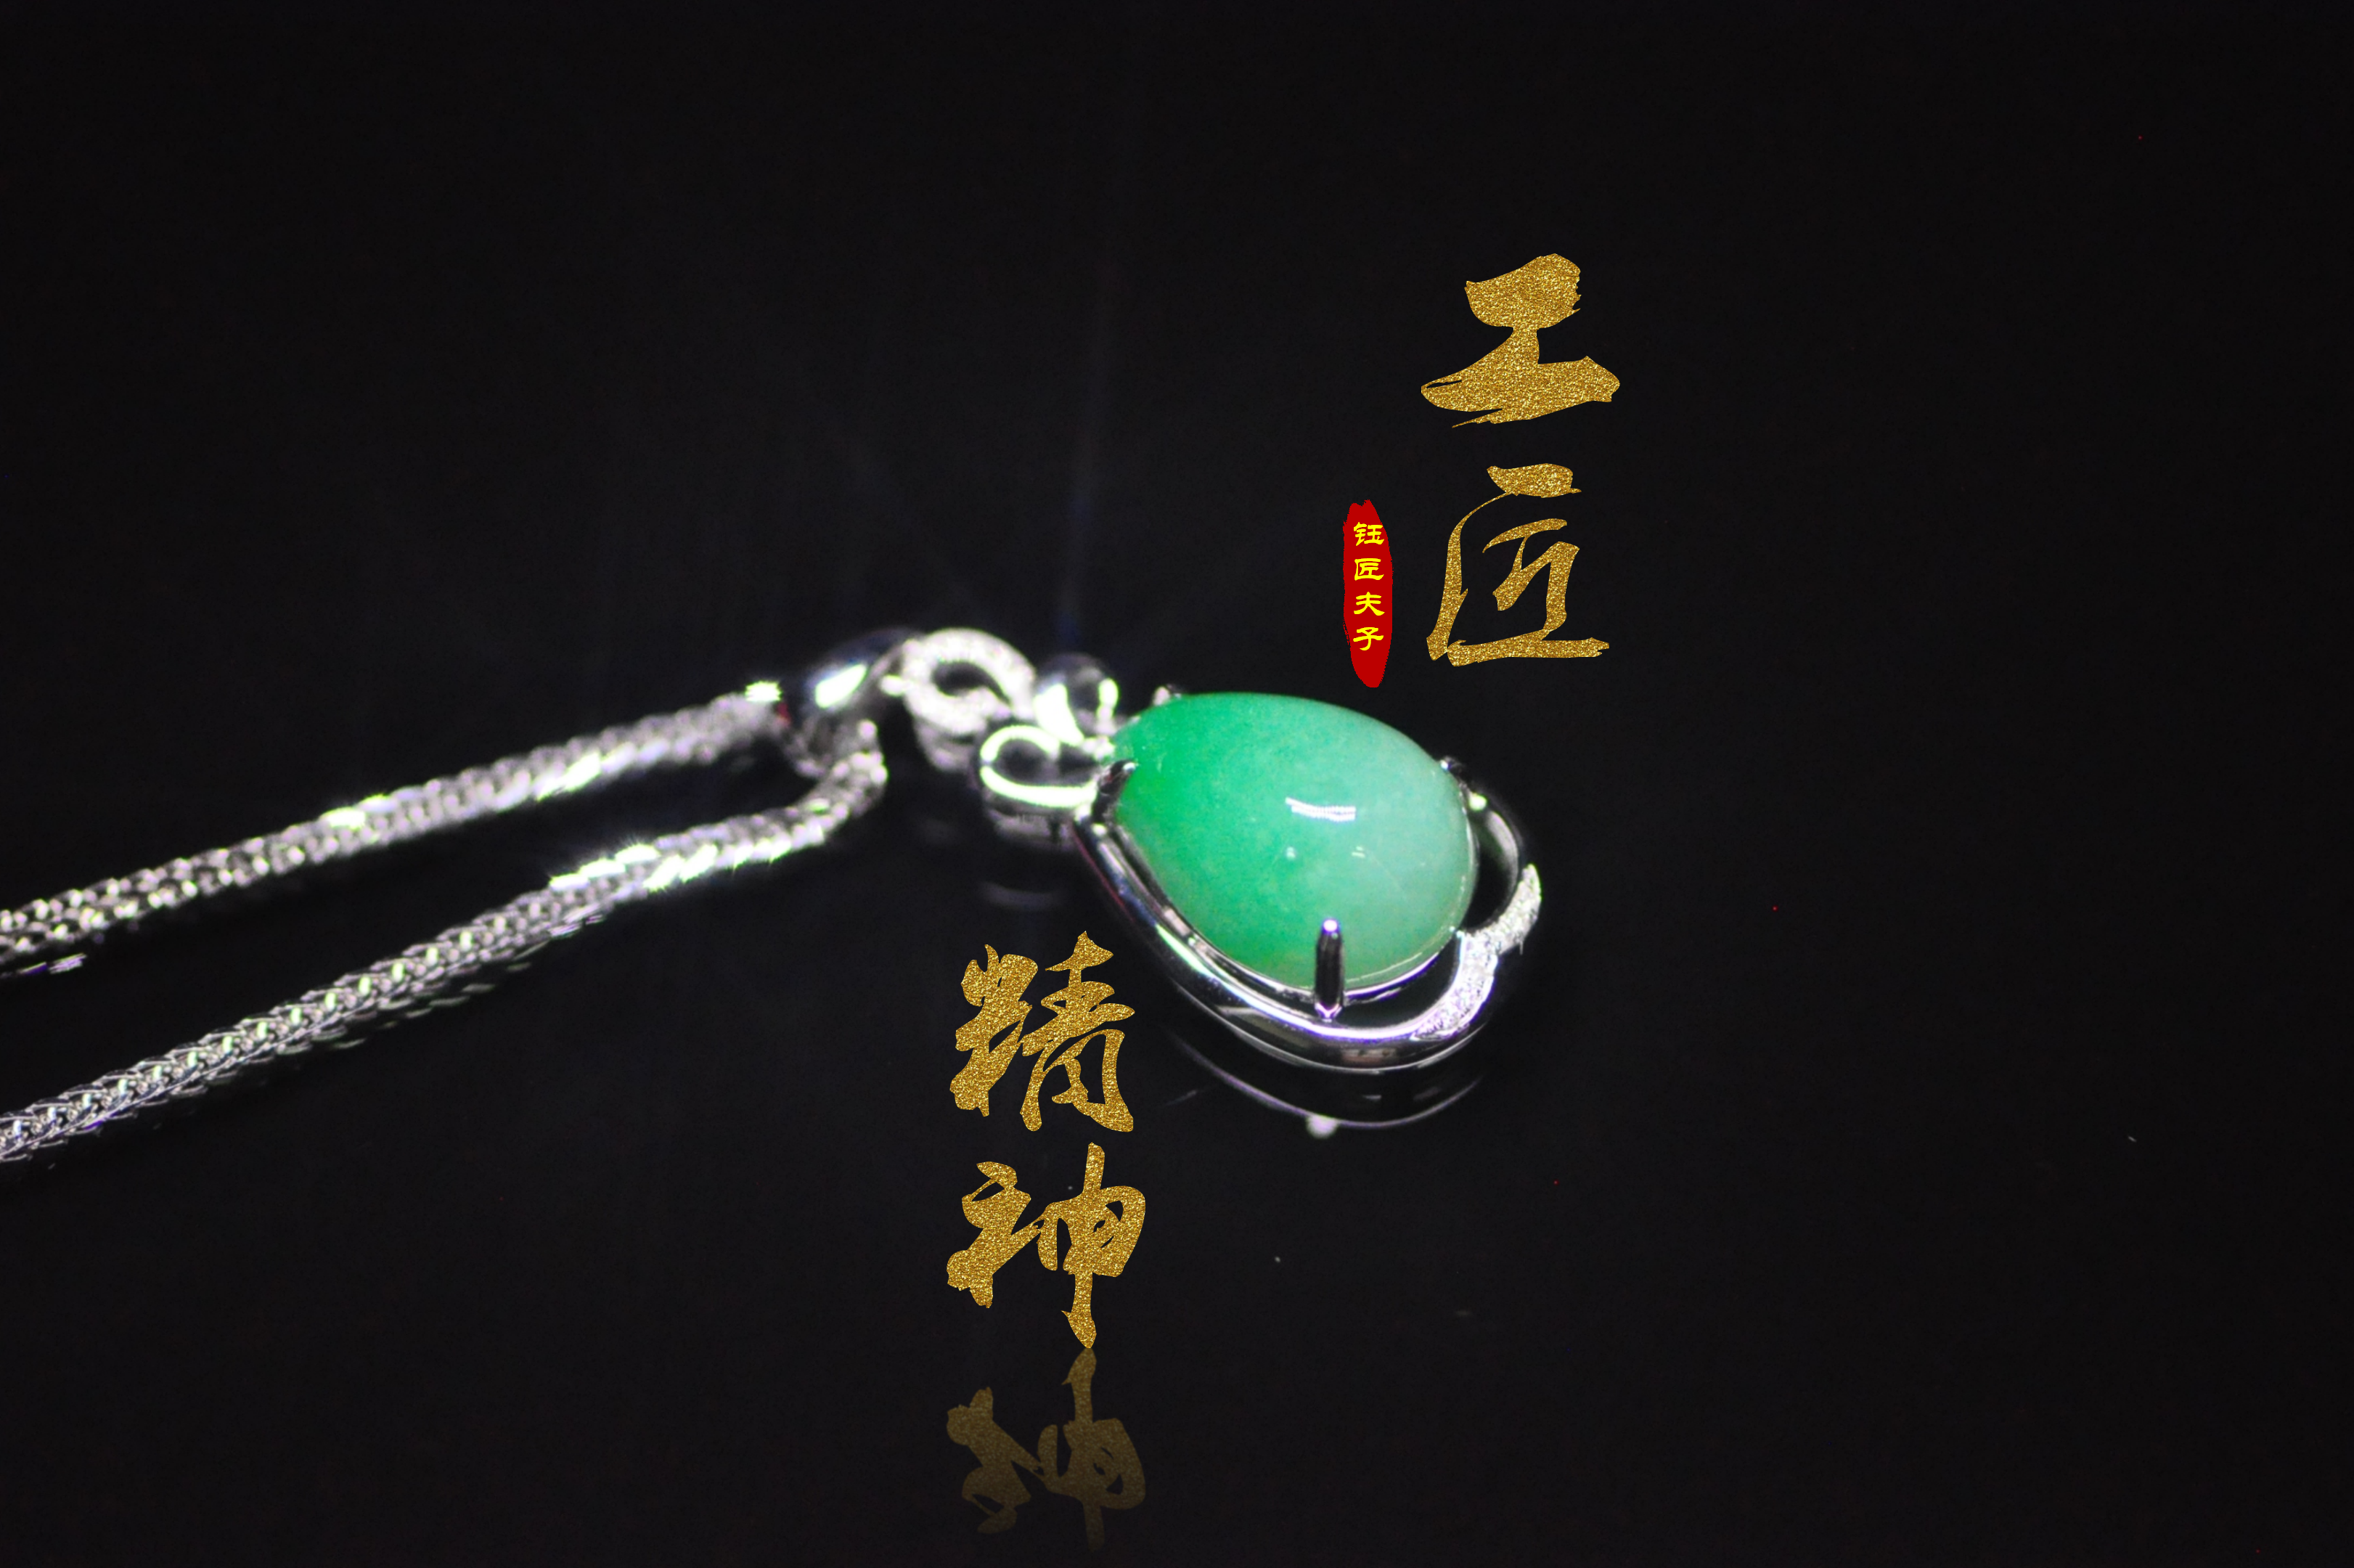 Yujian Master, inheriting the essence of craftsmanship